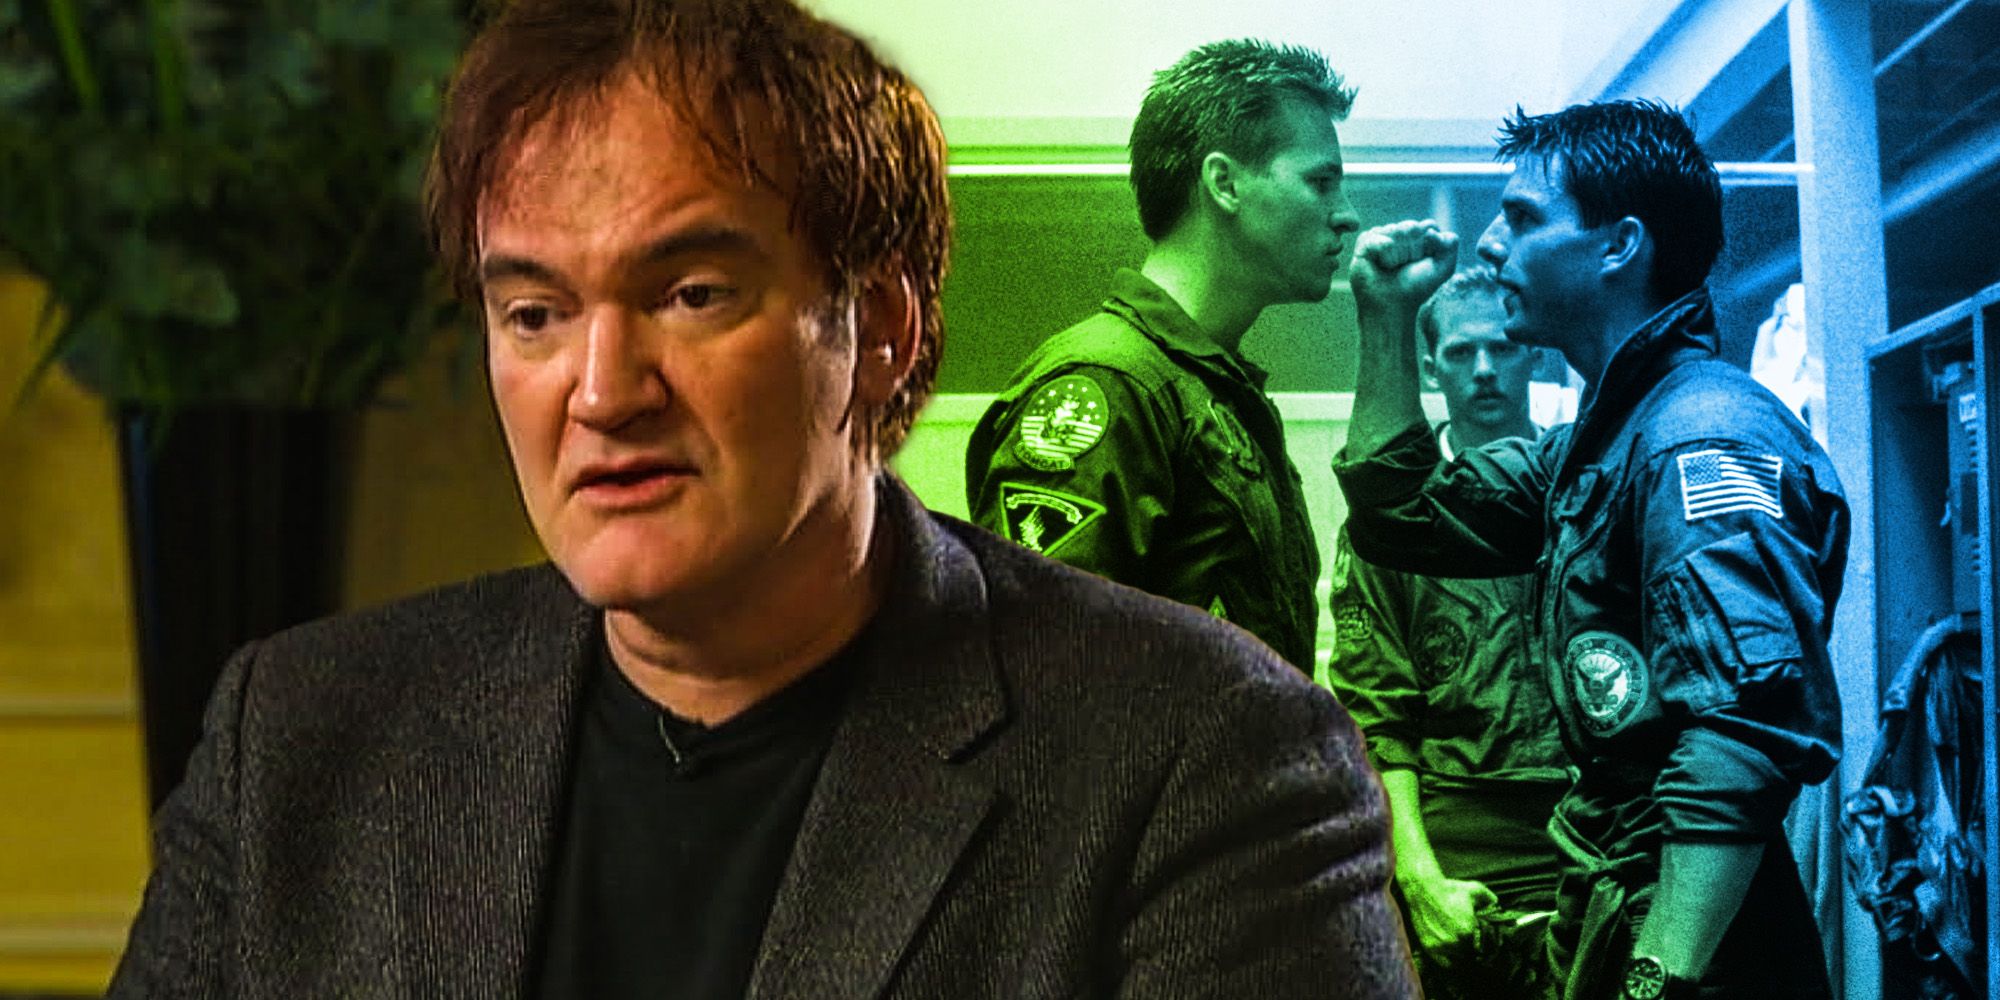 Quentin Tarantino Top Gun take